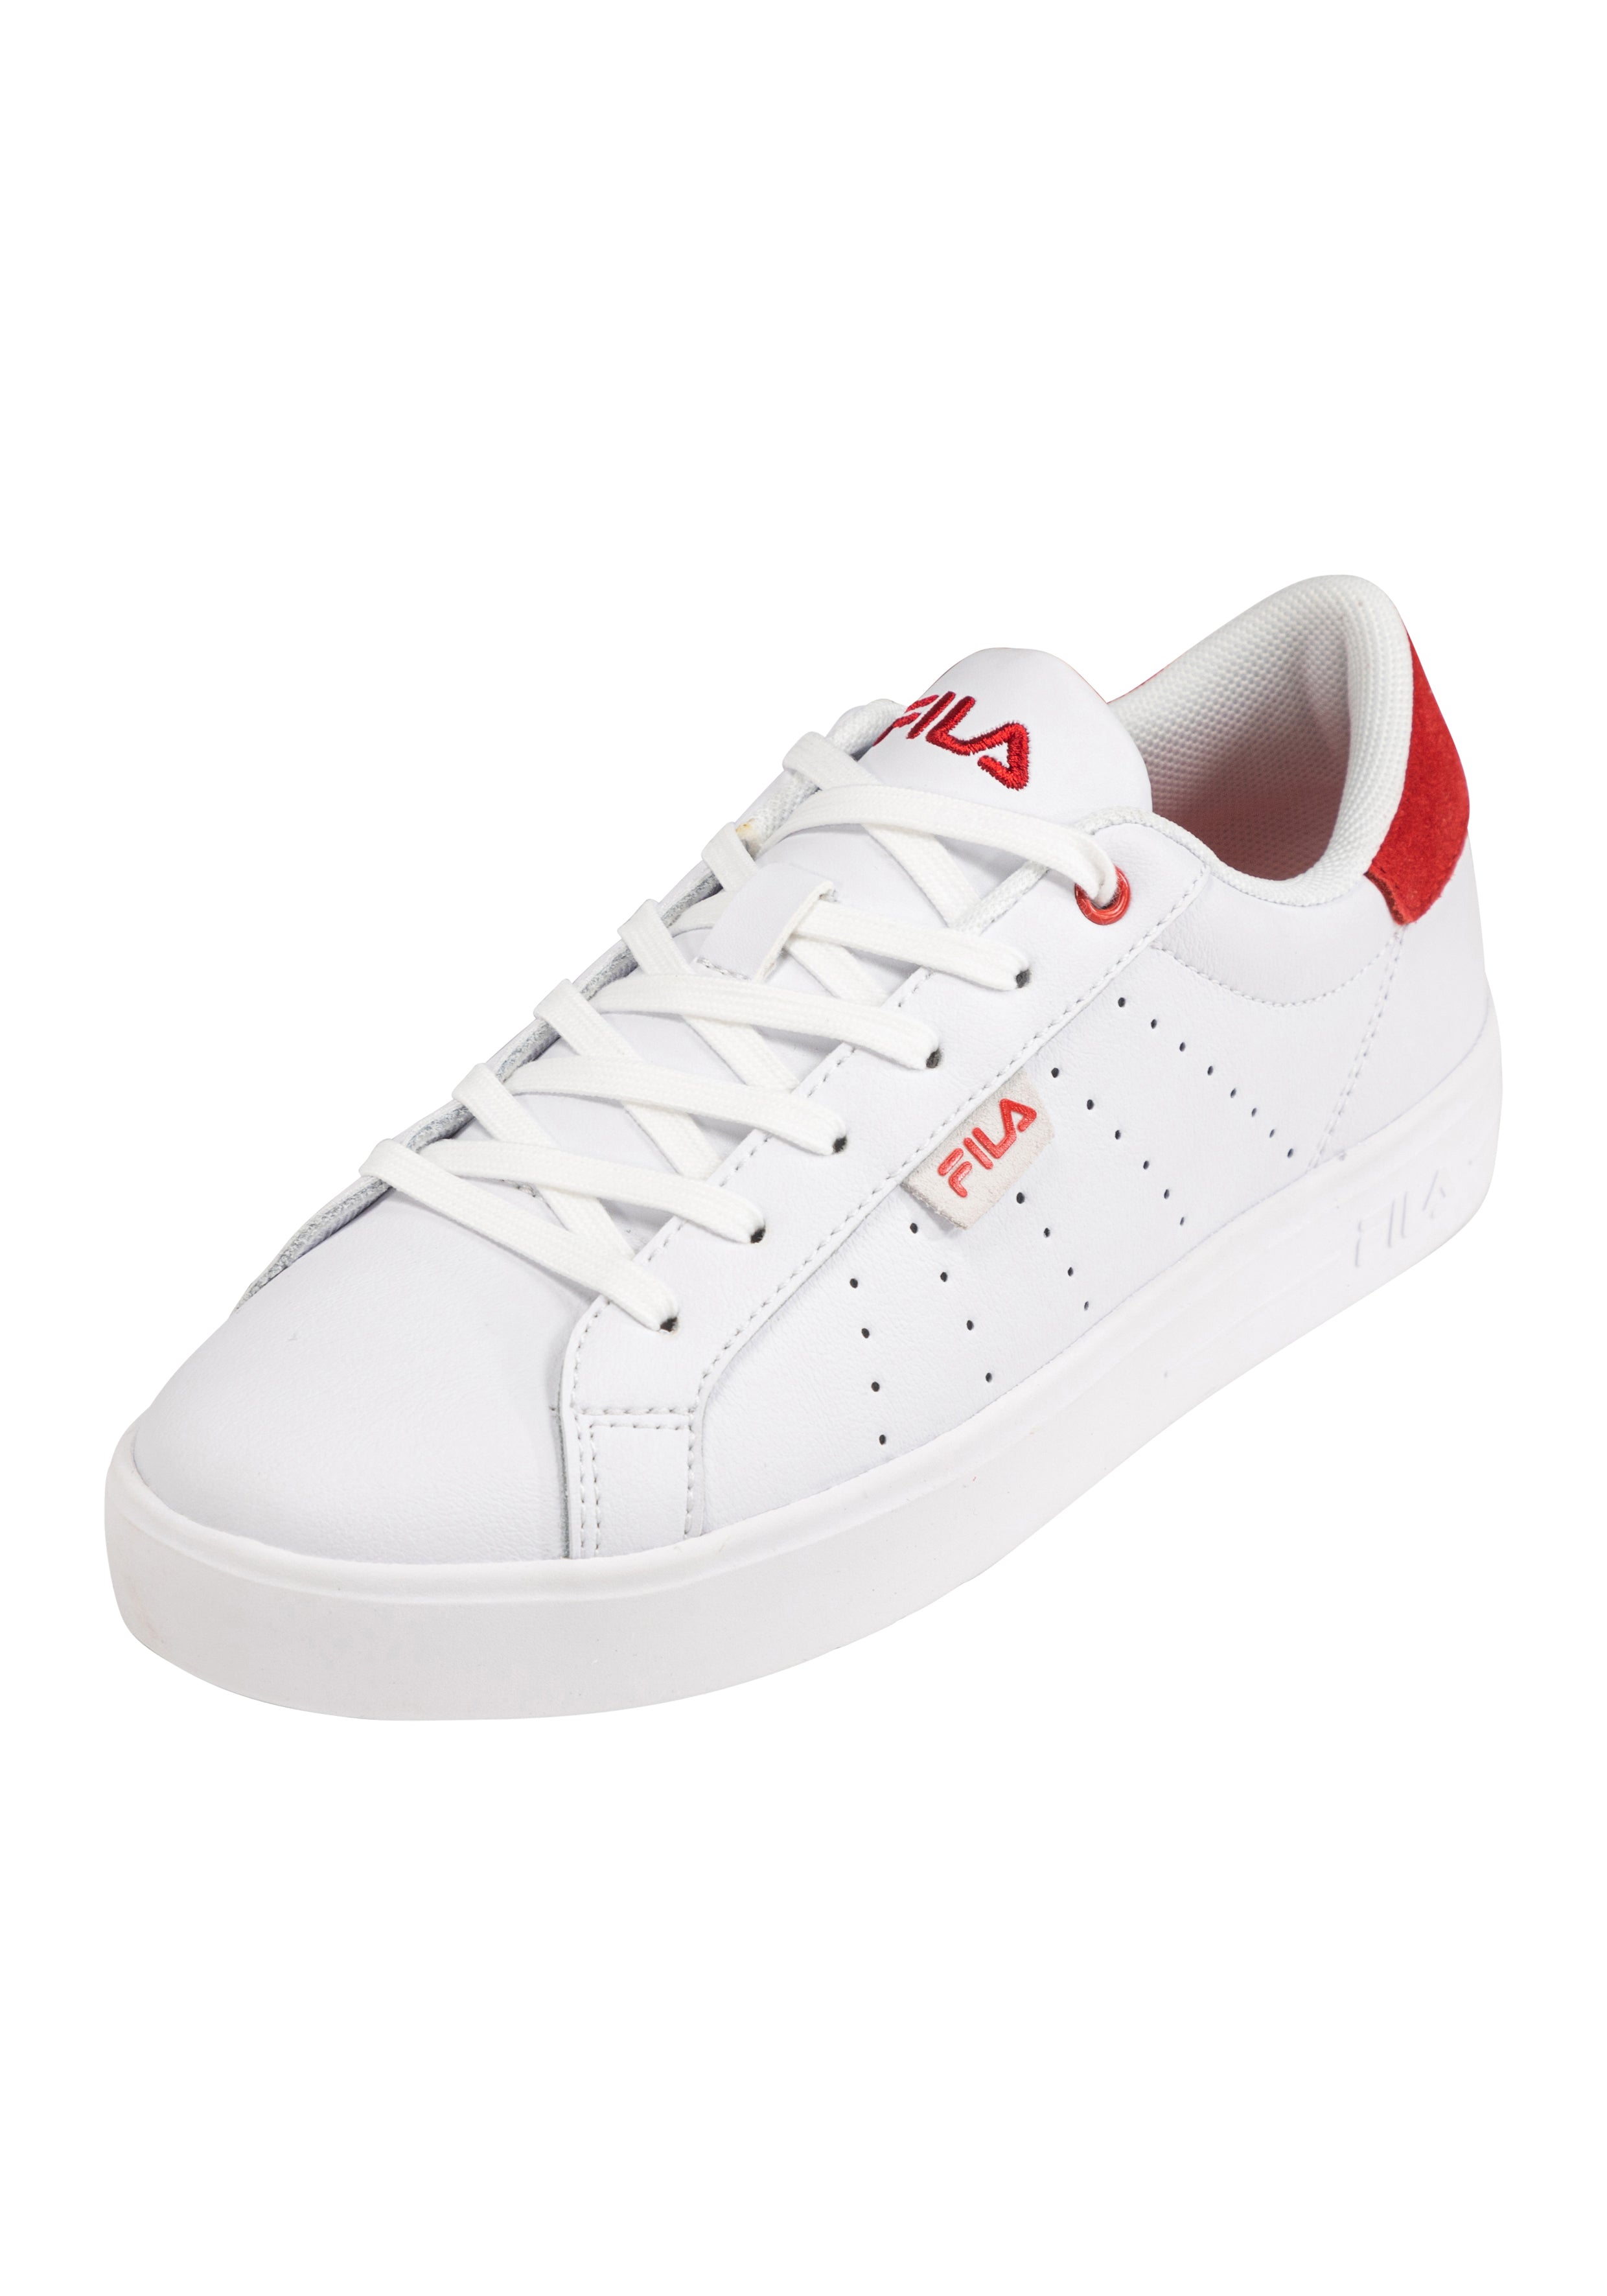 Lusso V Wmn in White-Fila Red Sneakers Fila   